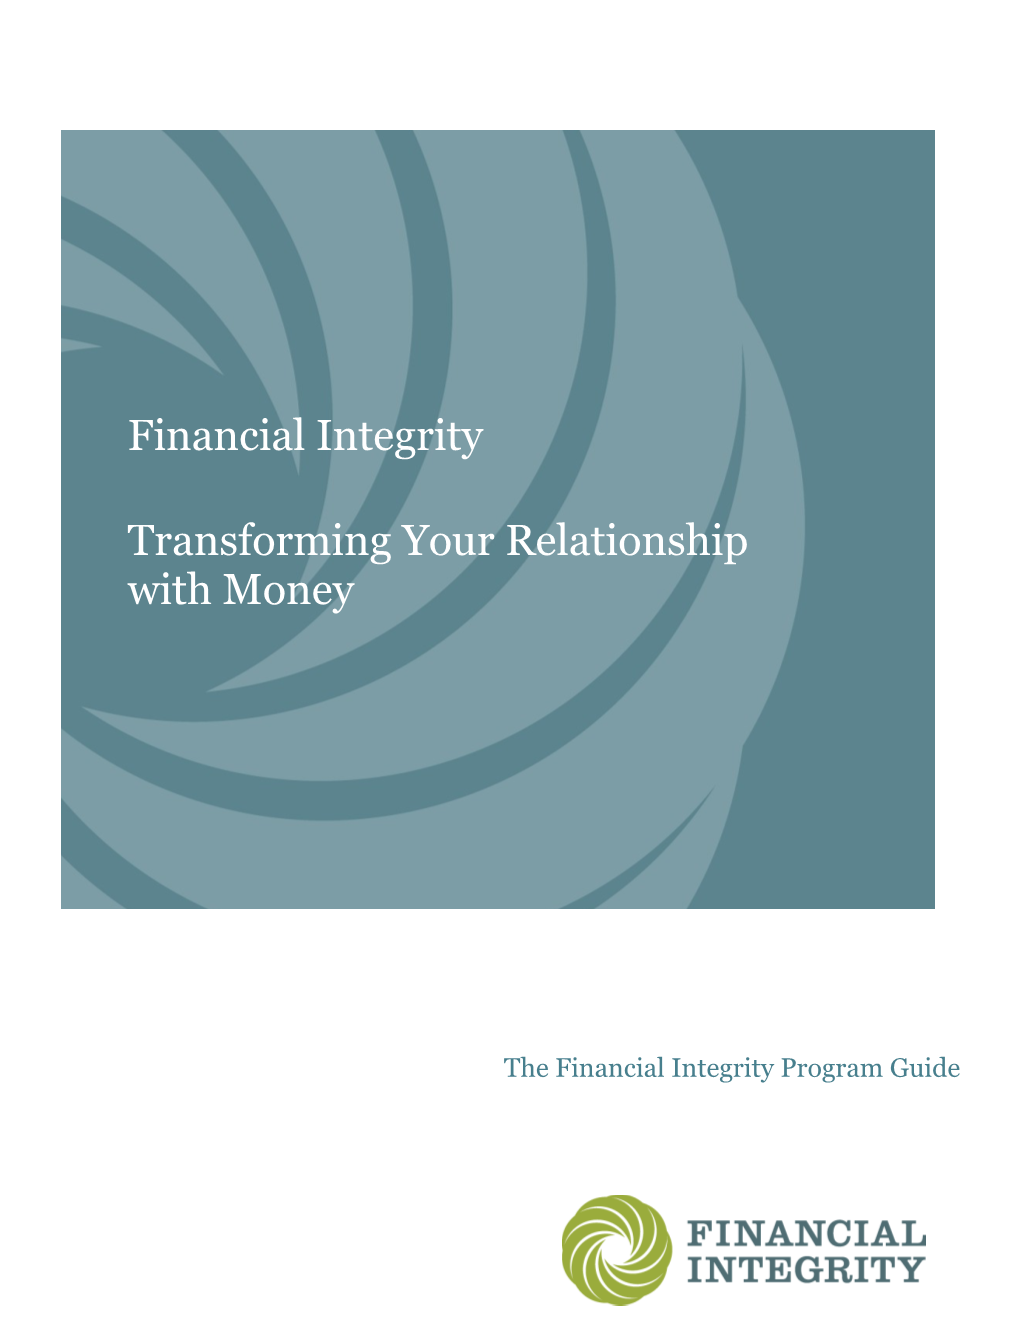 Financial Integrity Program Guide